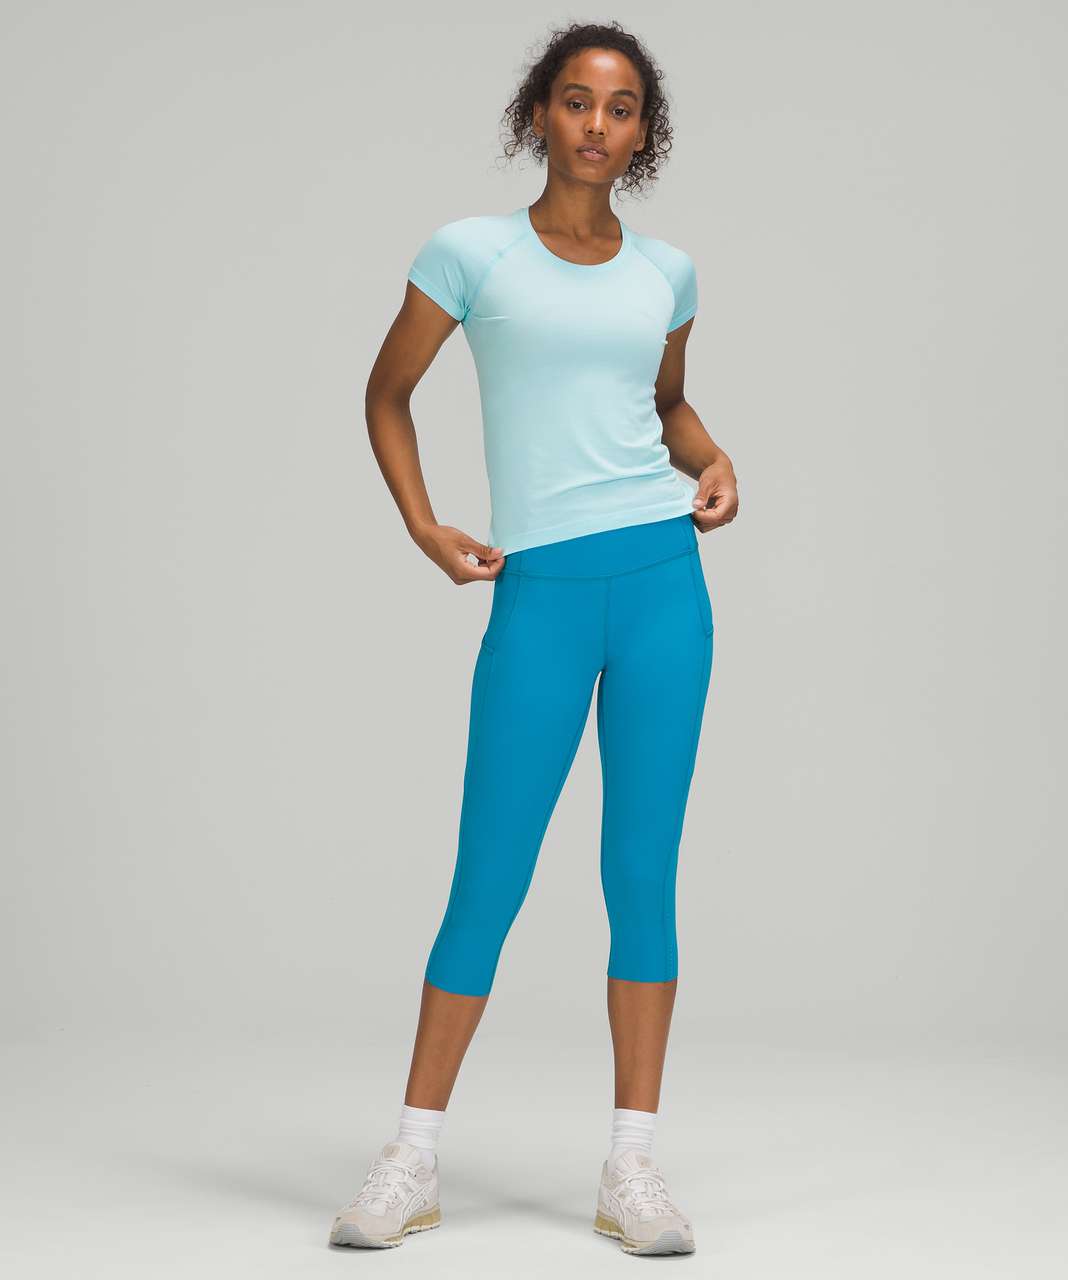 Lululemon Swiftly Tech Short Sleeve Shirt 2.0 *Race Length - Icing Blue / Icing Blue